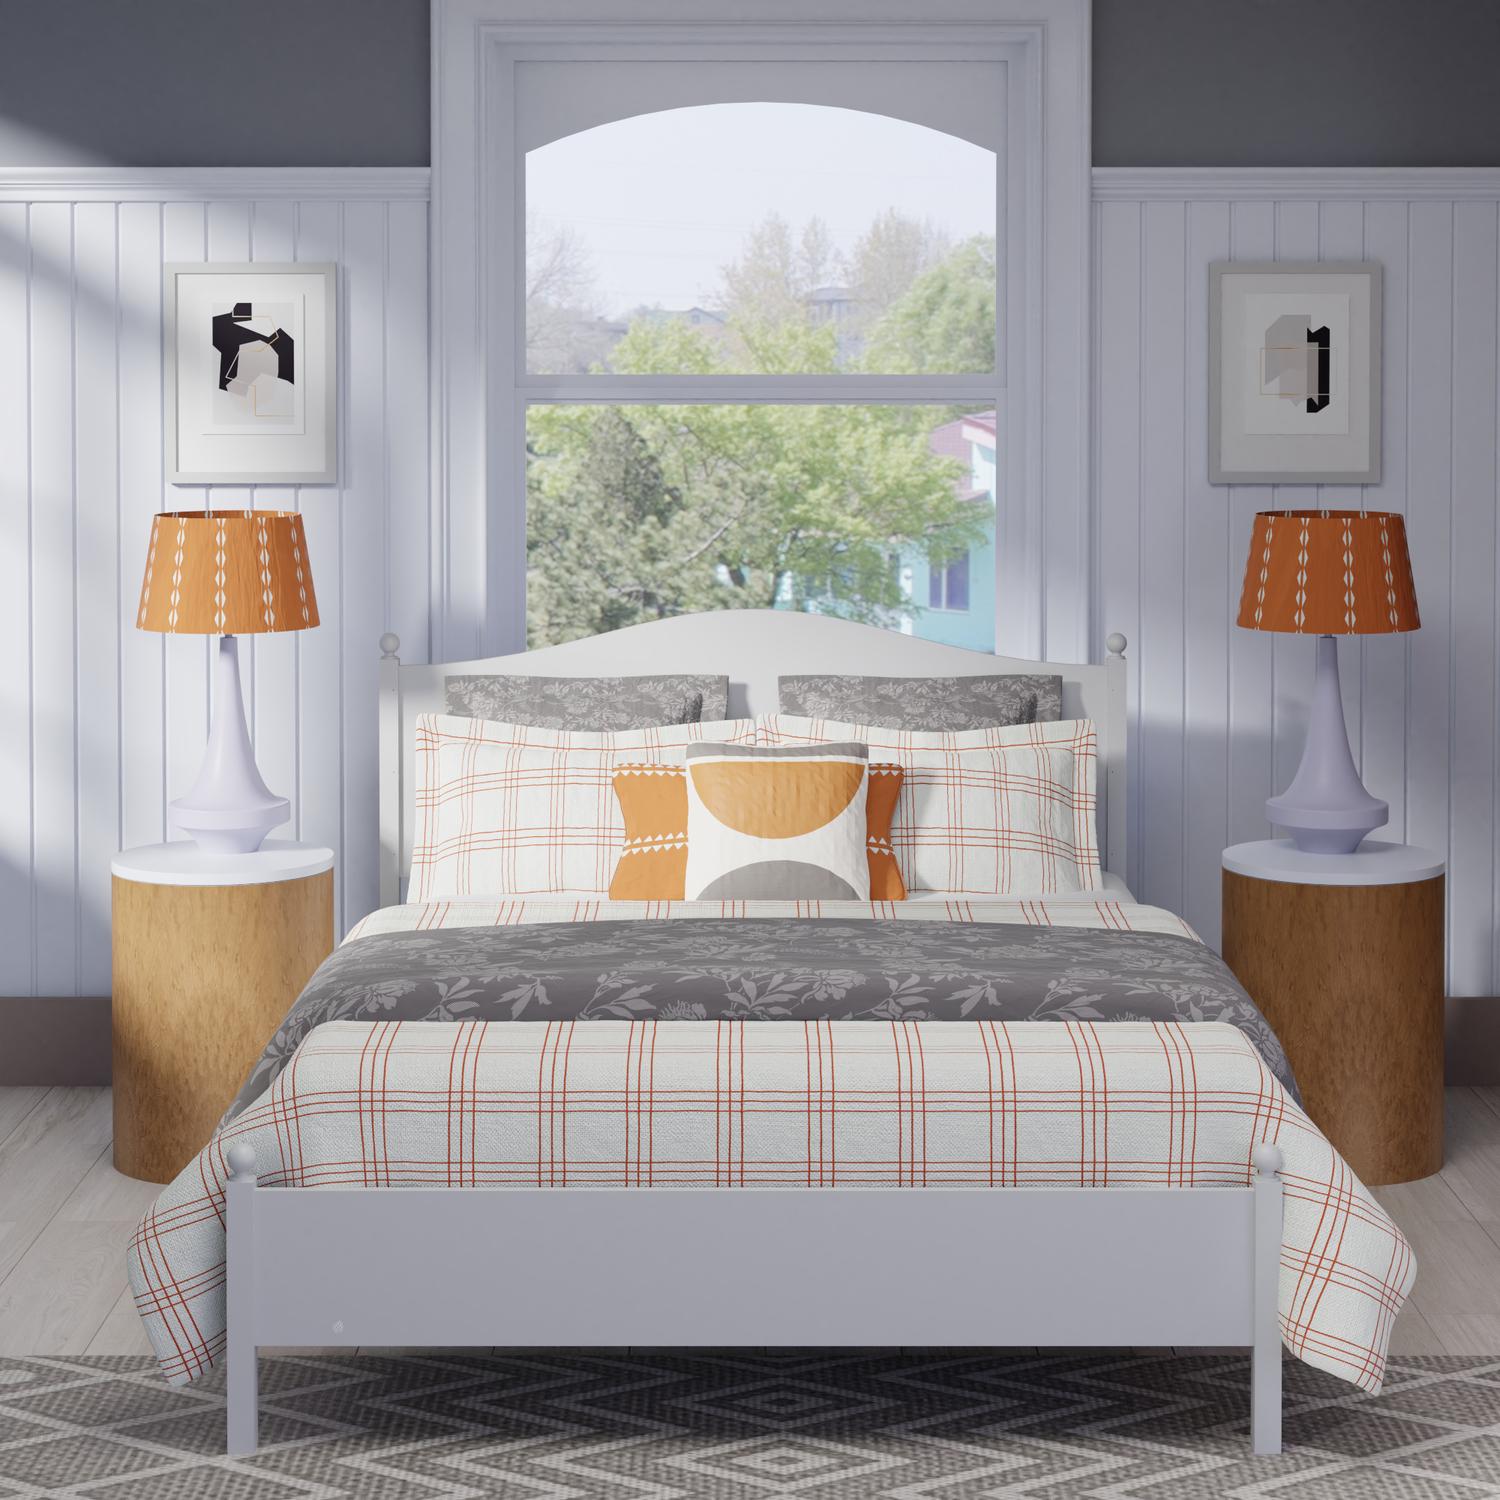 Brady wooden bed - Image orange